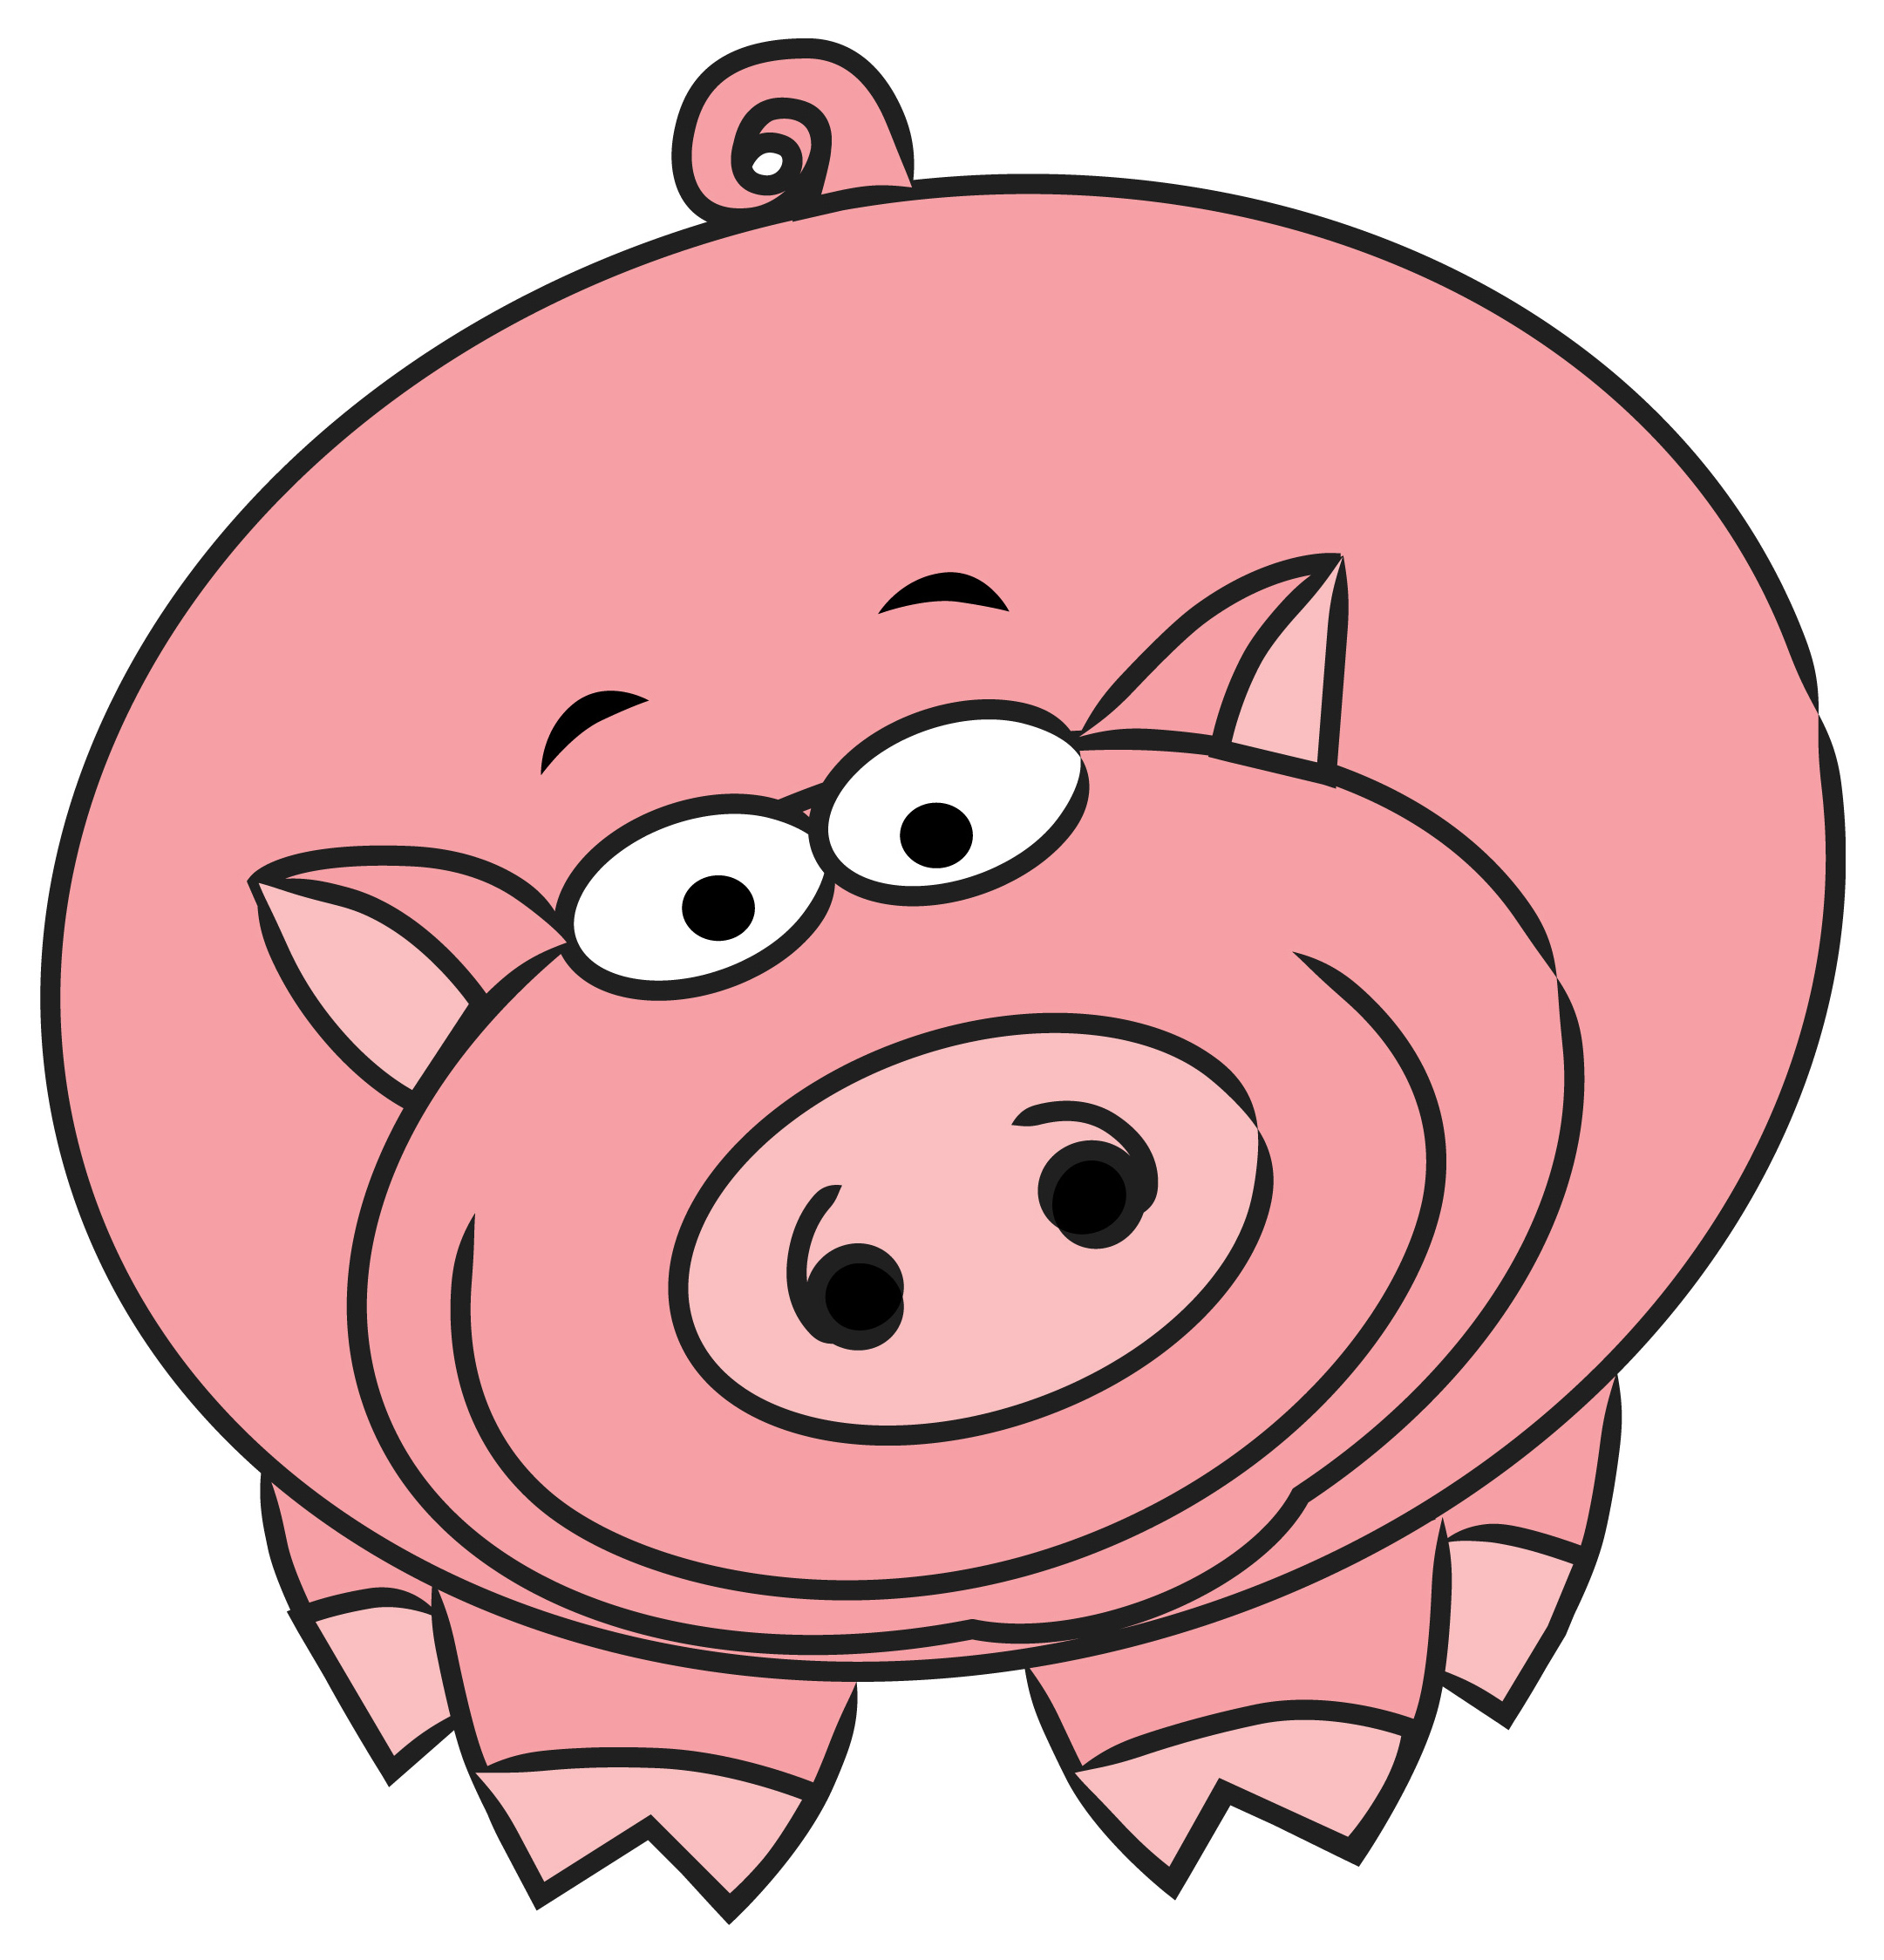 Draw-a-Pig-Intro.jpg